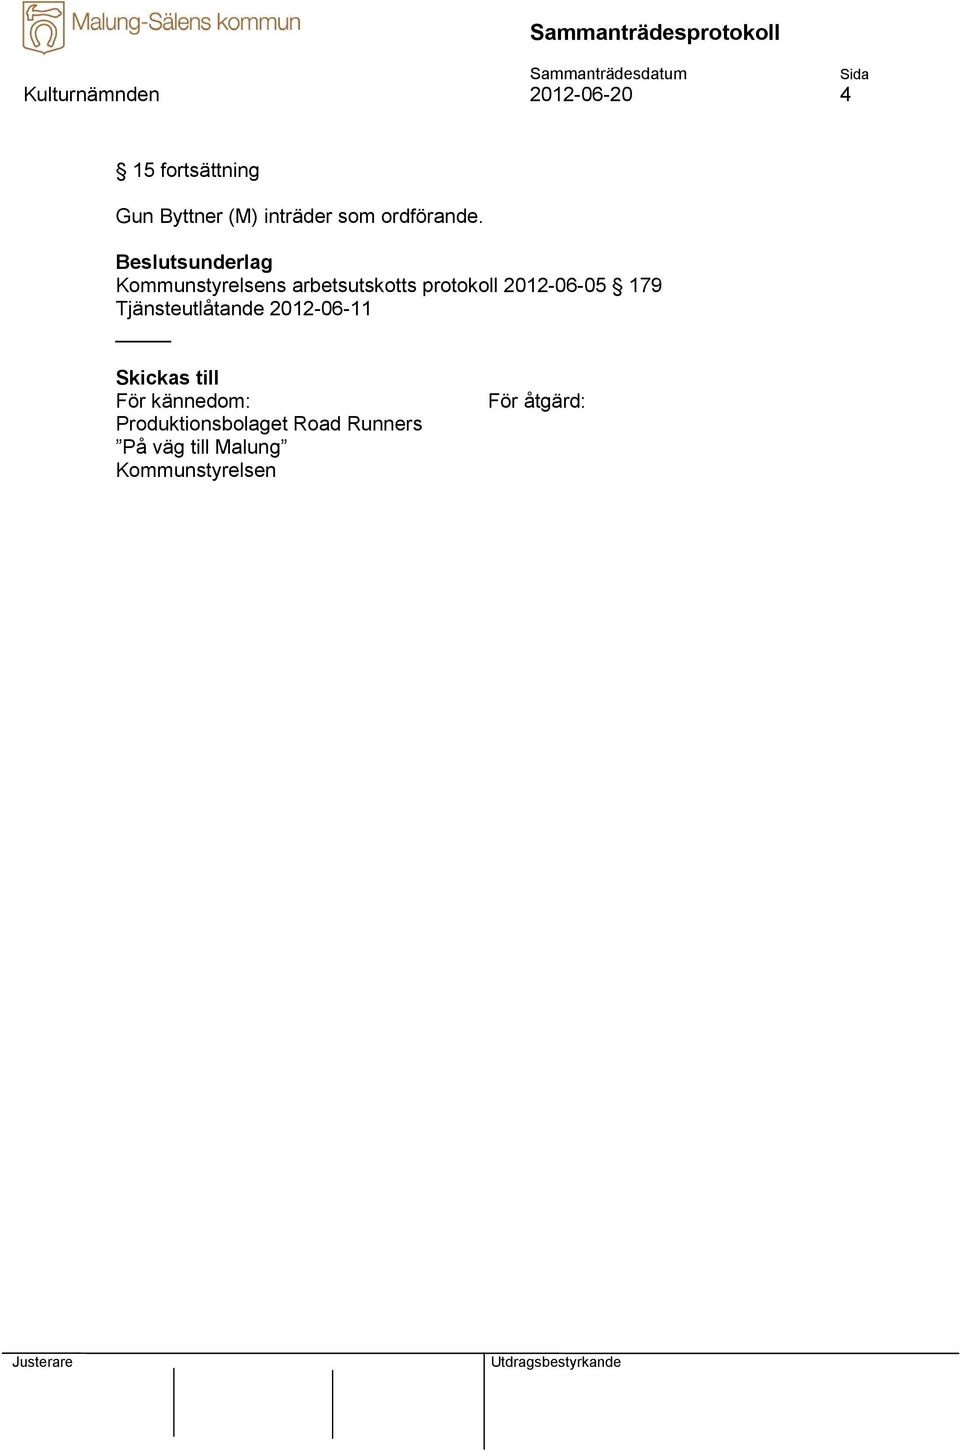 Kommunstyrelsens arbetsutskotts protokoll 2012-06-05 179